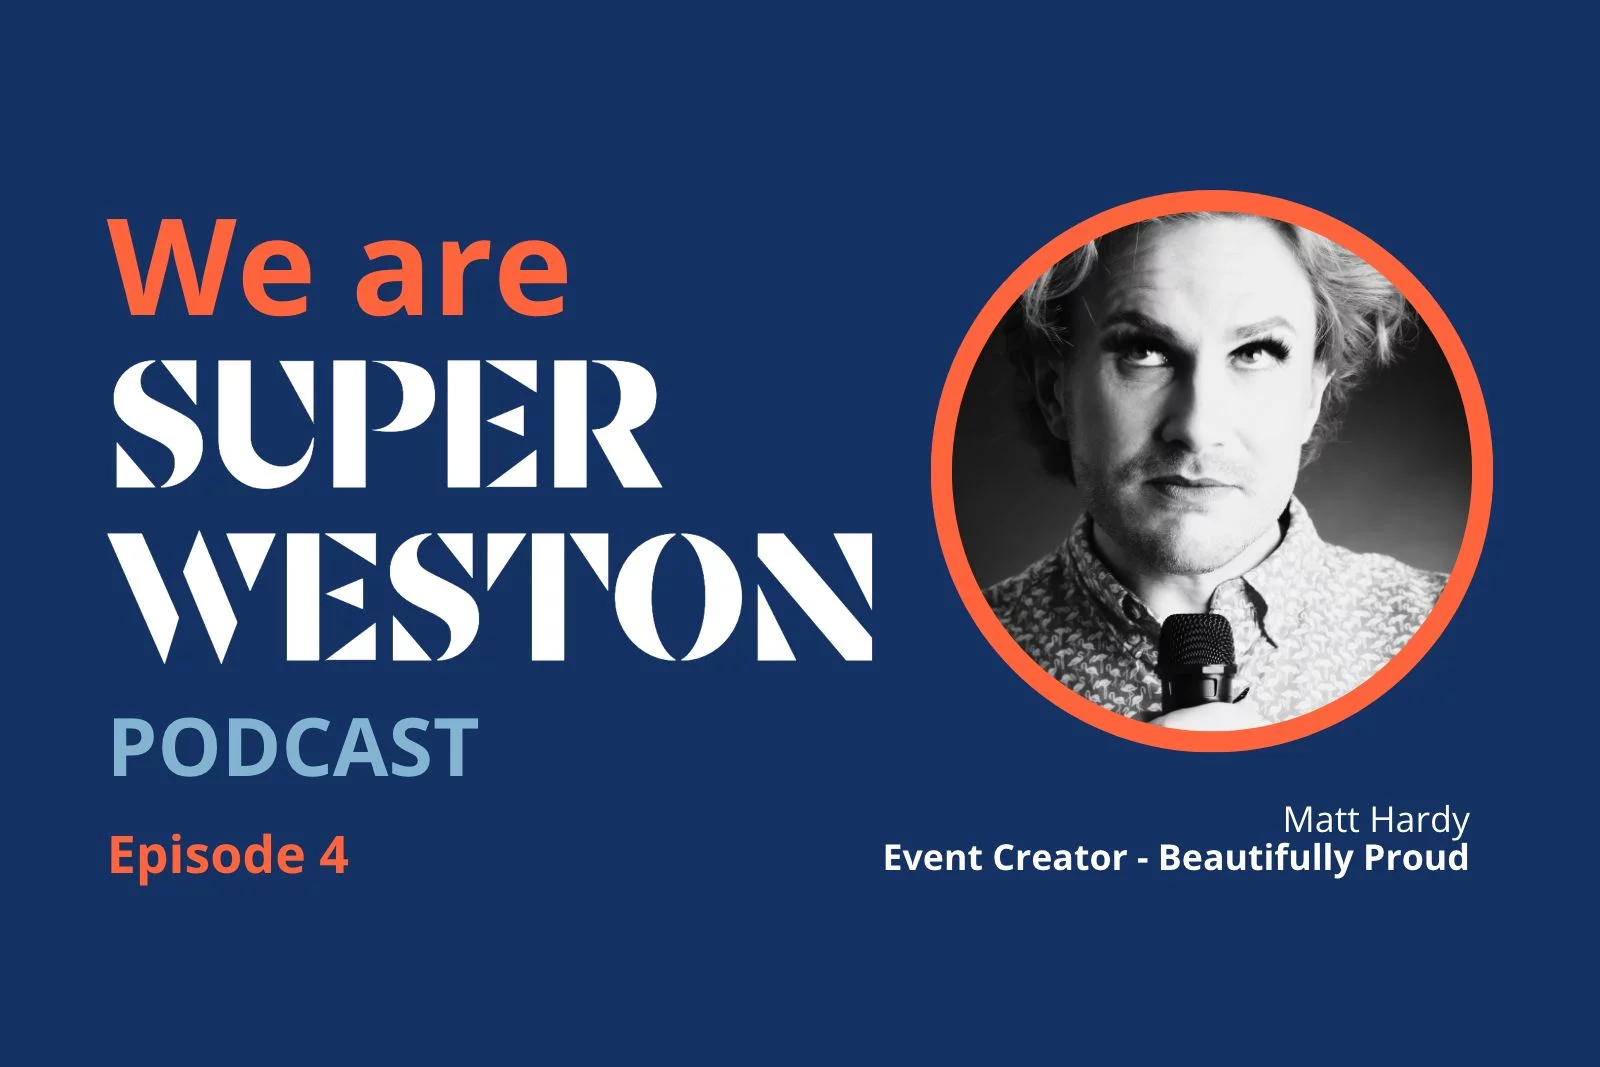 Matt Hardy podcast episode - We are Super Weston